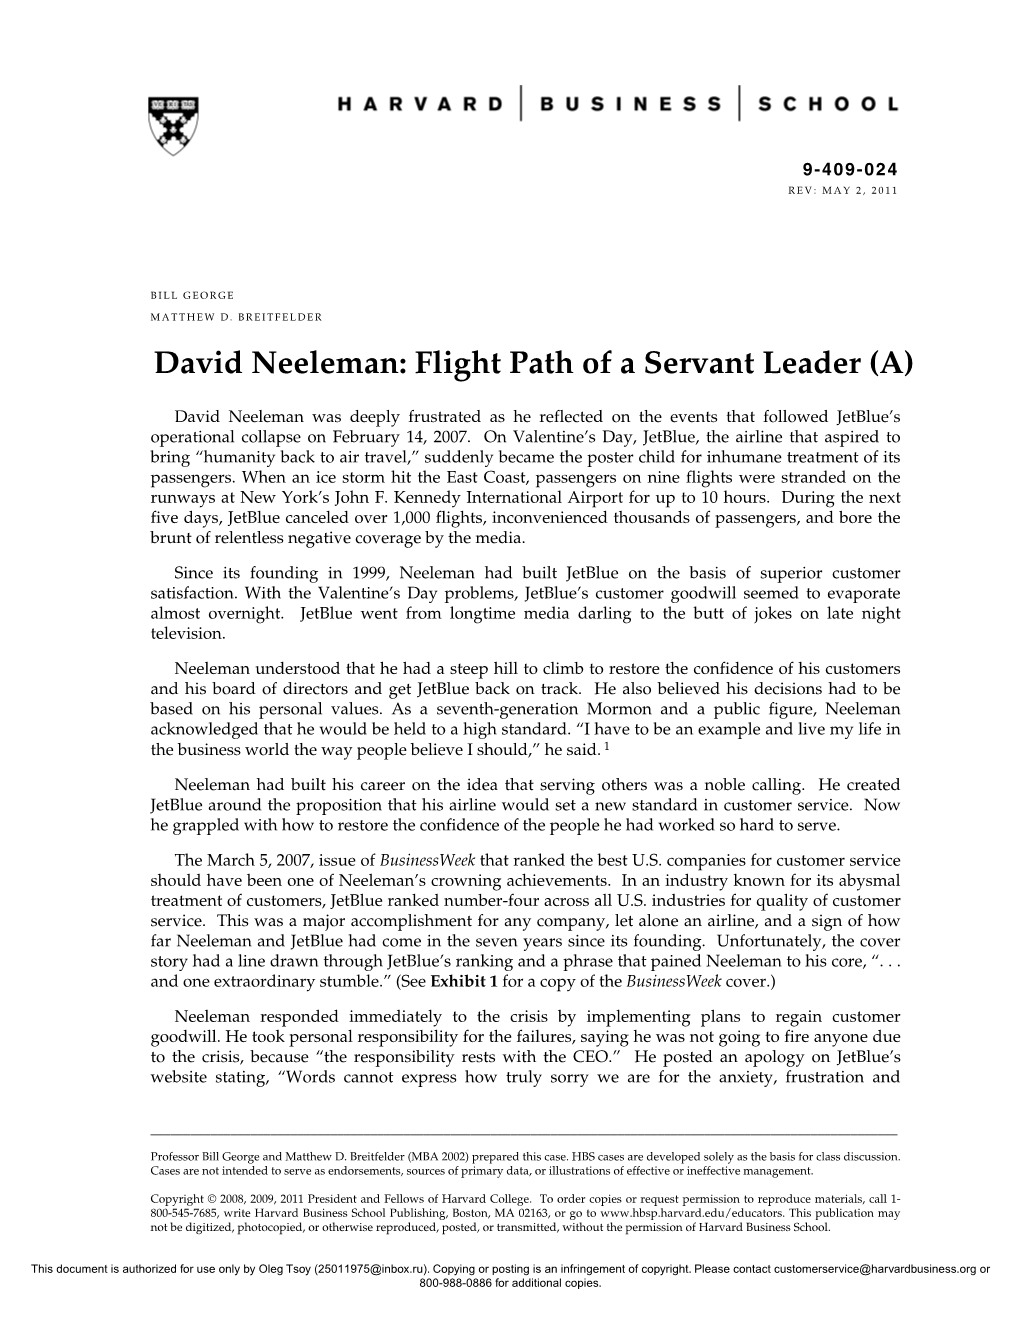 David Neeleman: Flight Path of a Servant Leader (A)